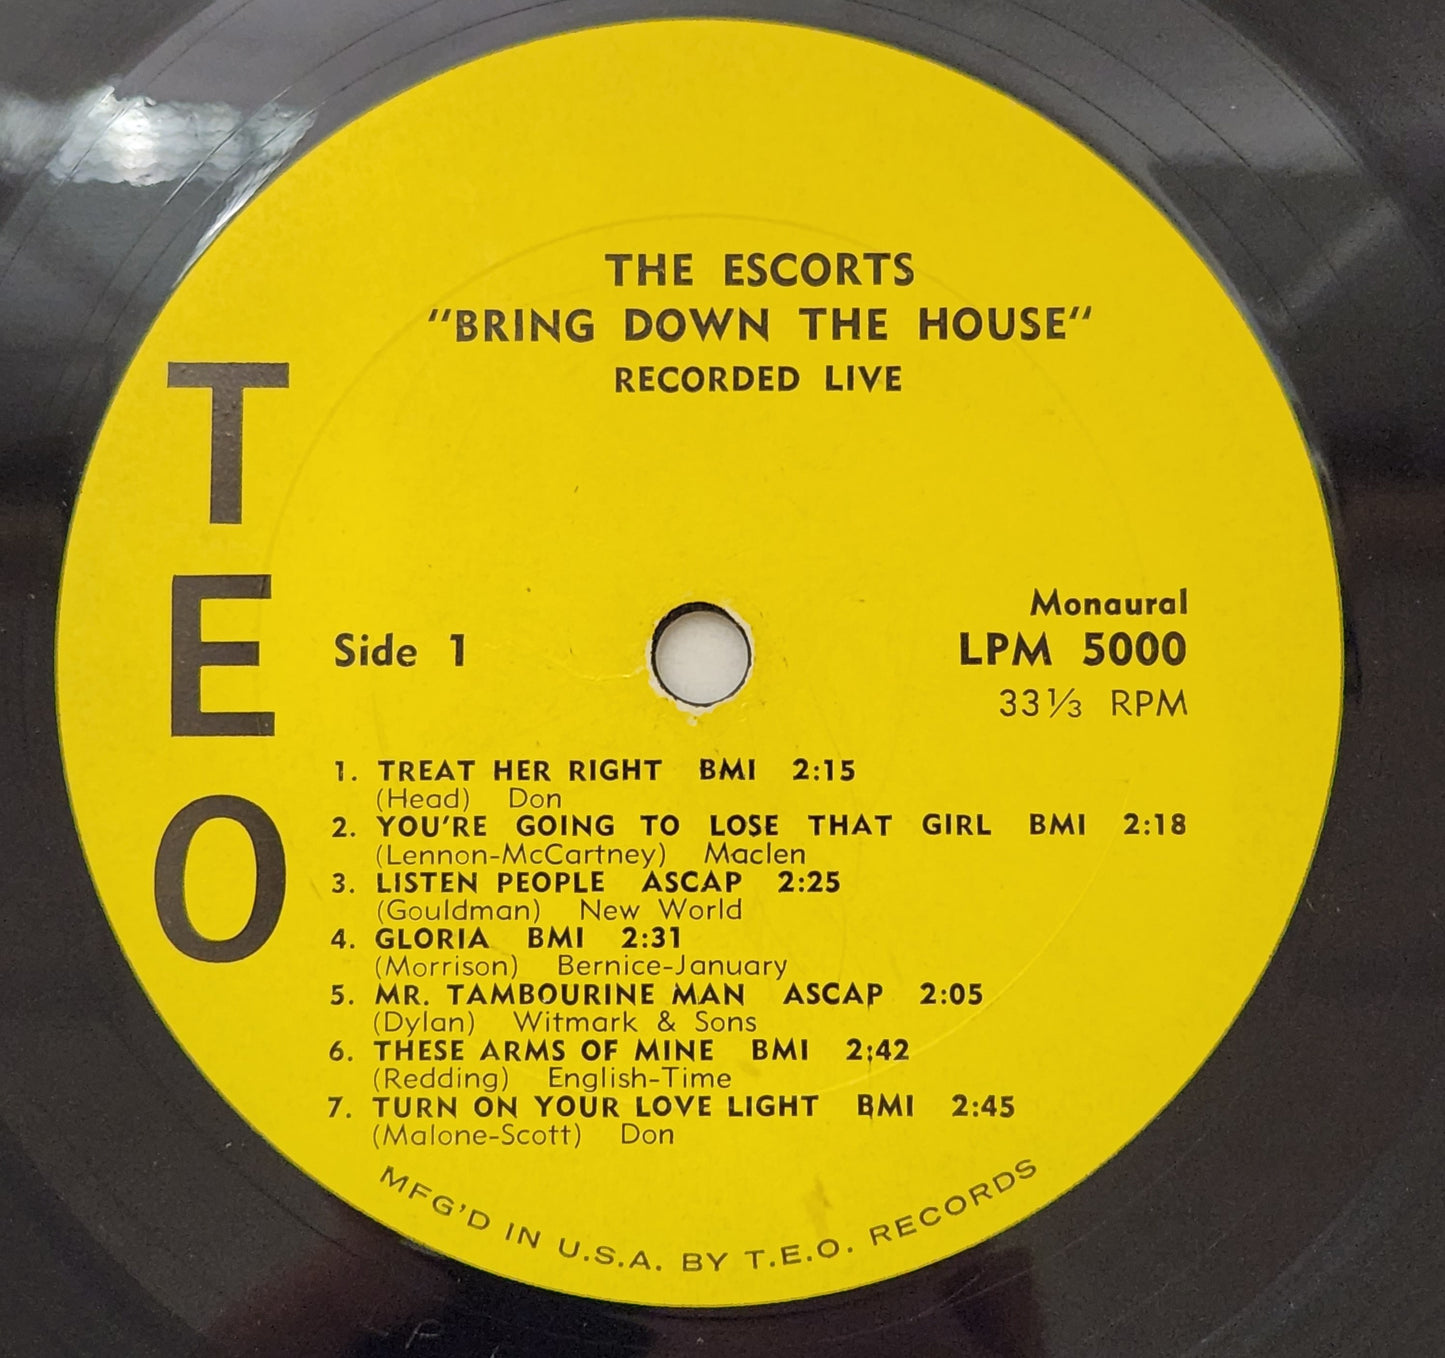 The Escorts "Bring Down The House" 1966 Garage Rock Record Album